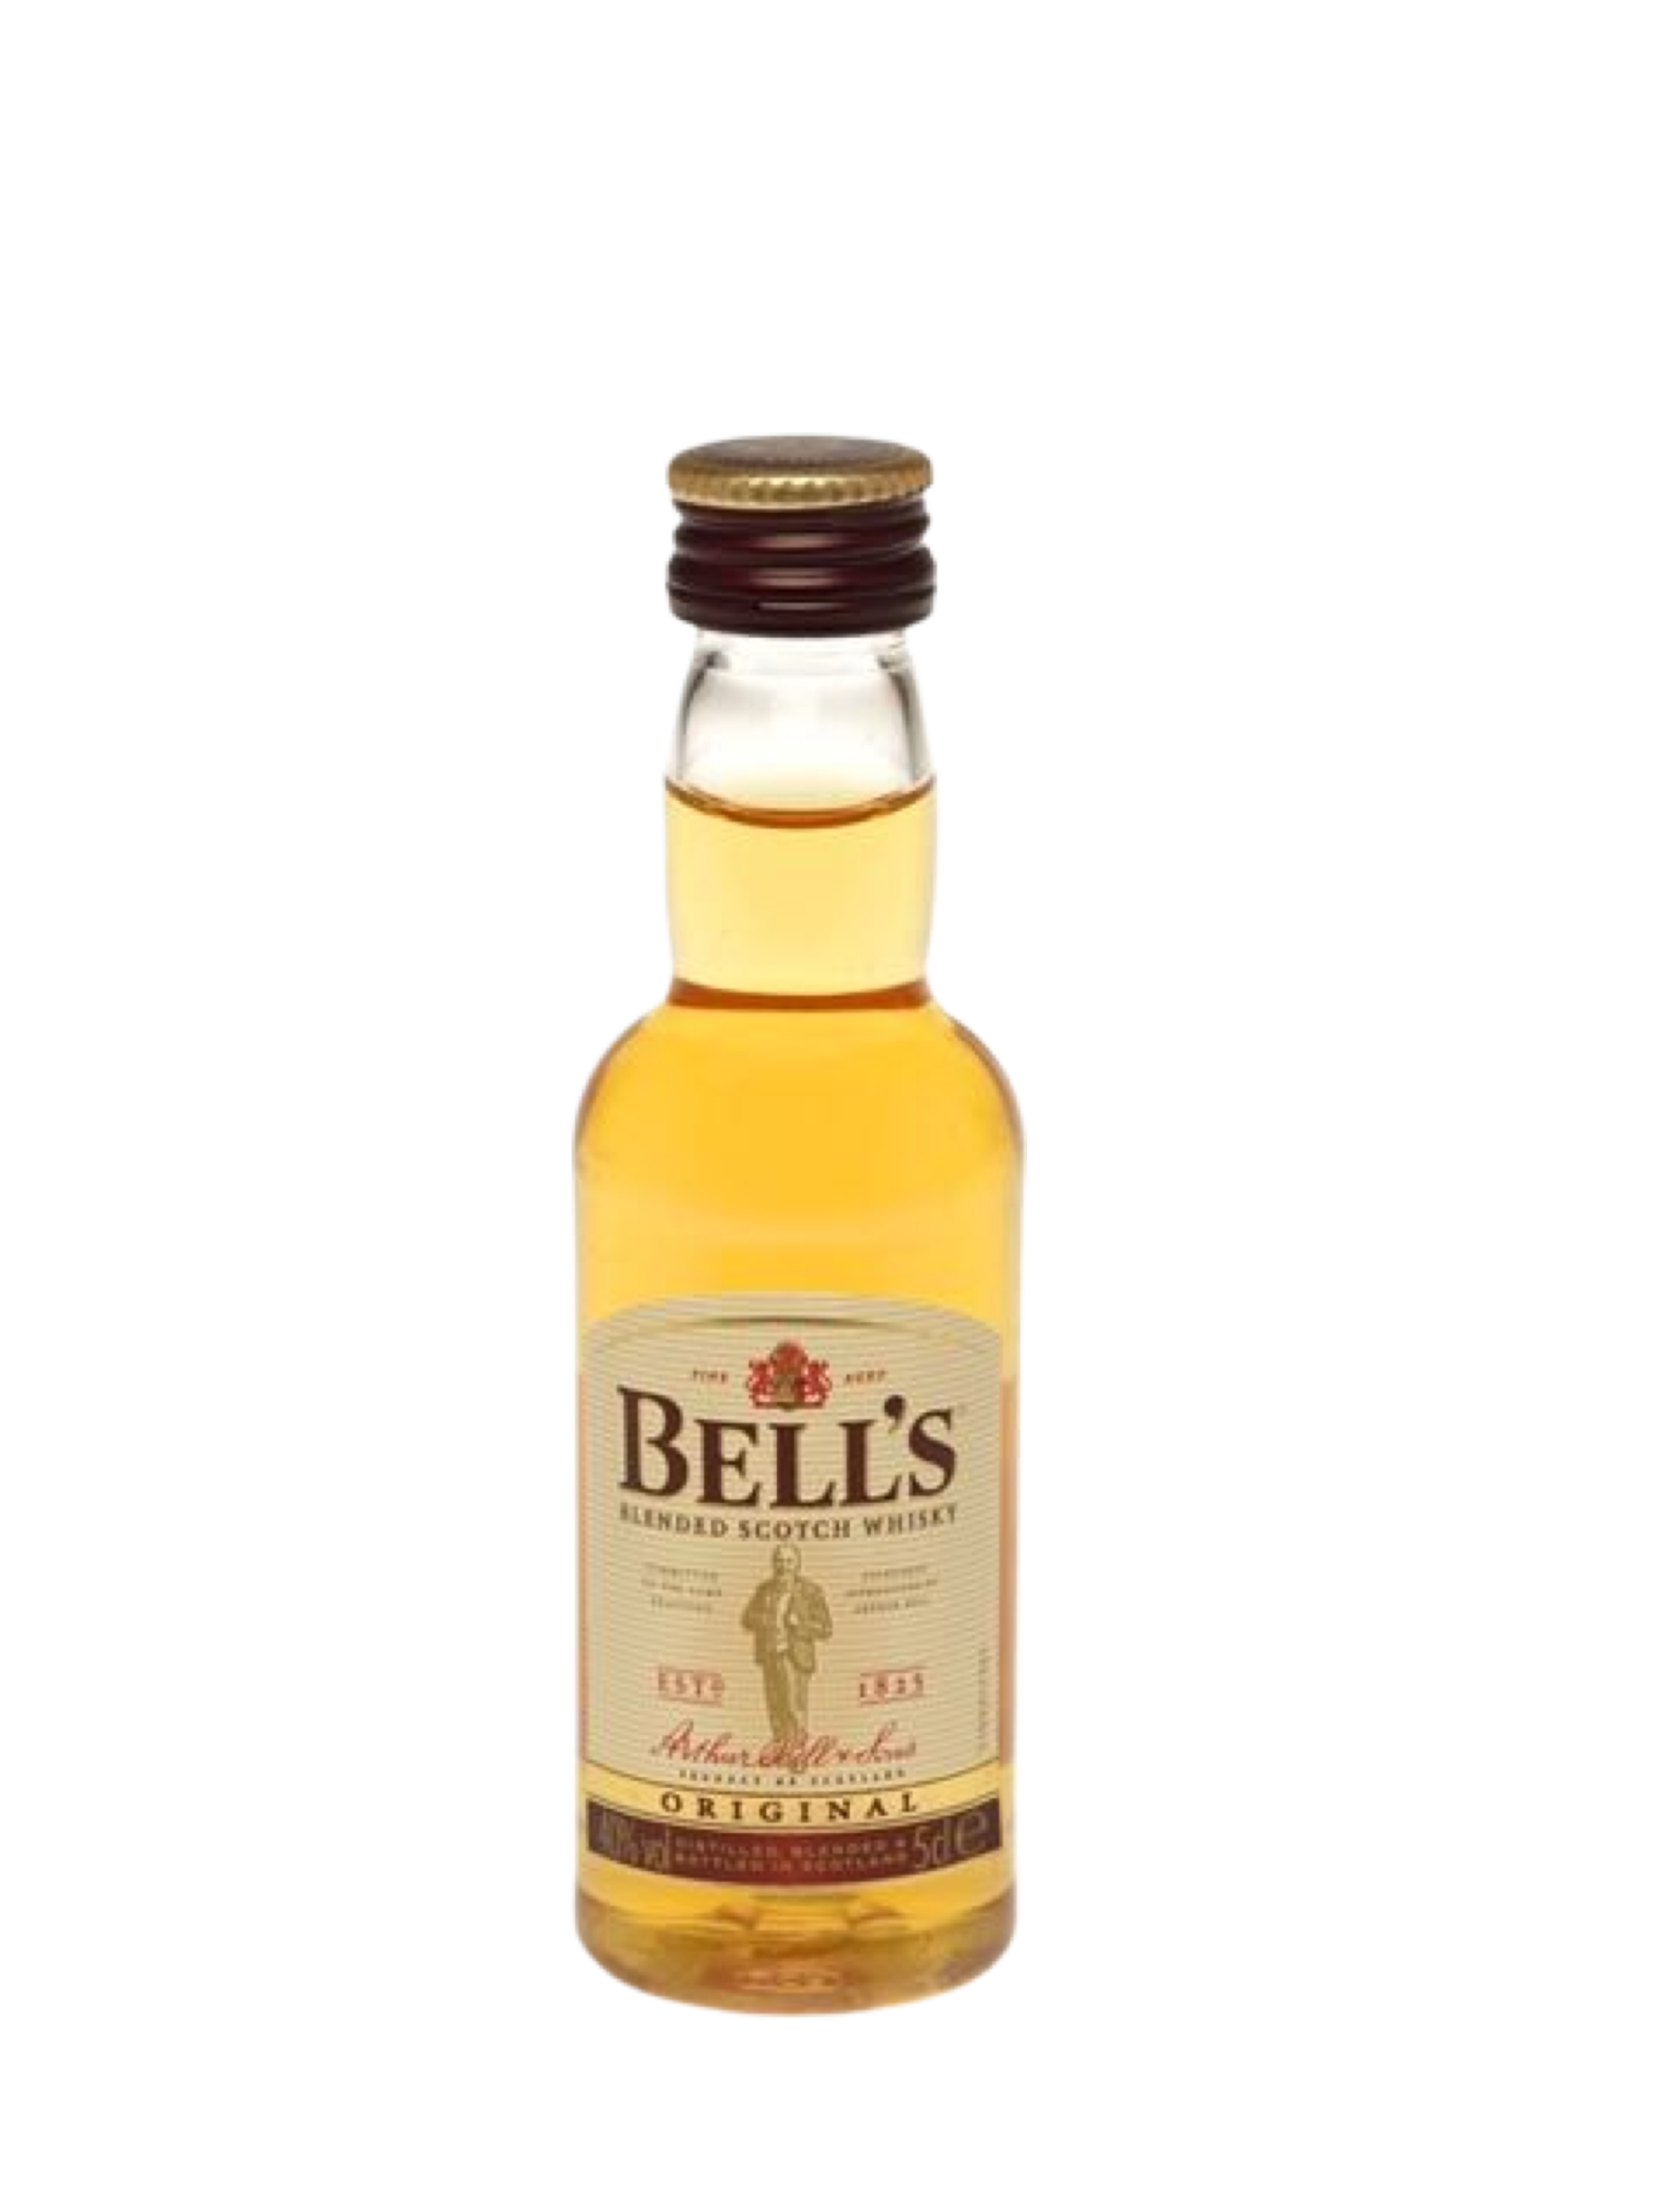 Белс контакты. Виски "Bell's", 50 мл. Виски Бэллс ориджинал 40% 0,5л *12. Виски Бэллс купажированный. Виски шотландский Бэллс ориджинал 0.5л.